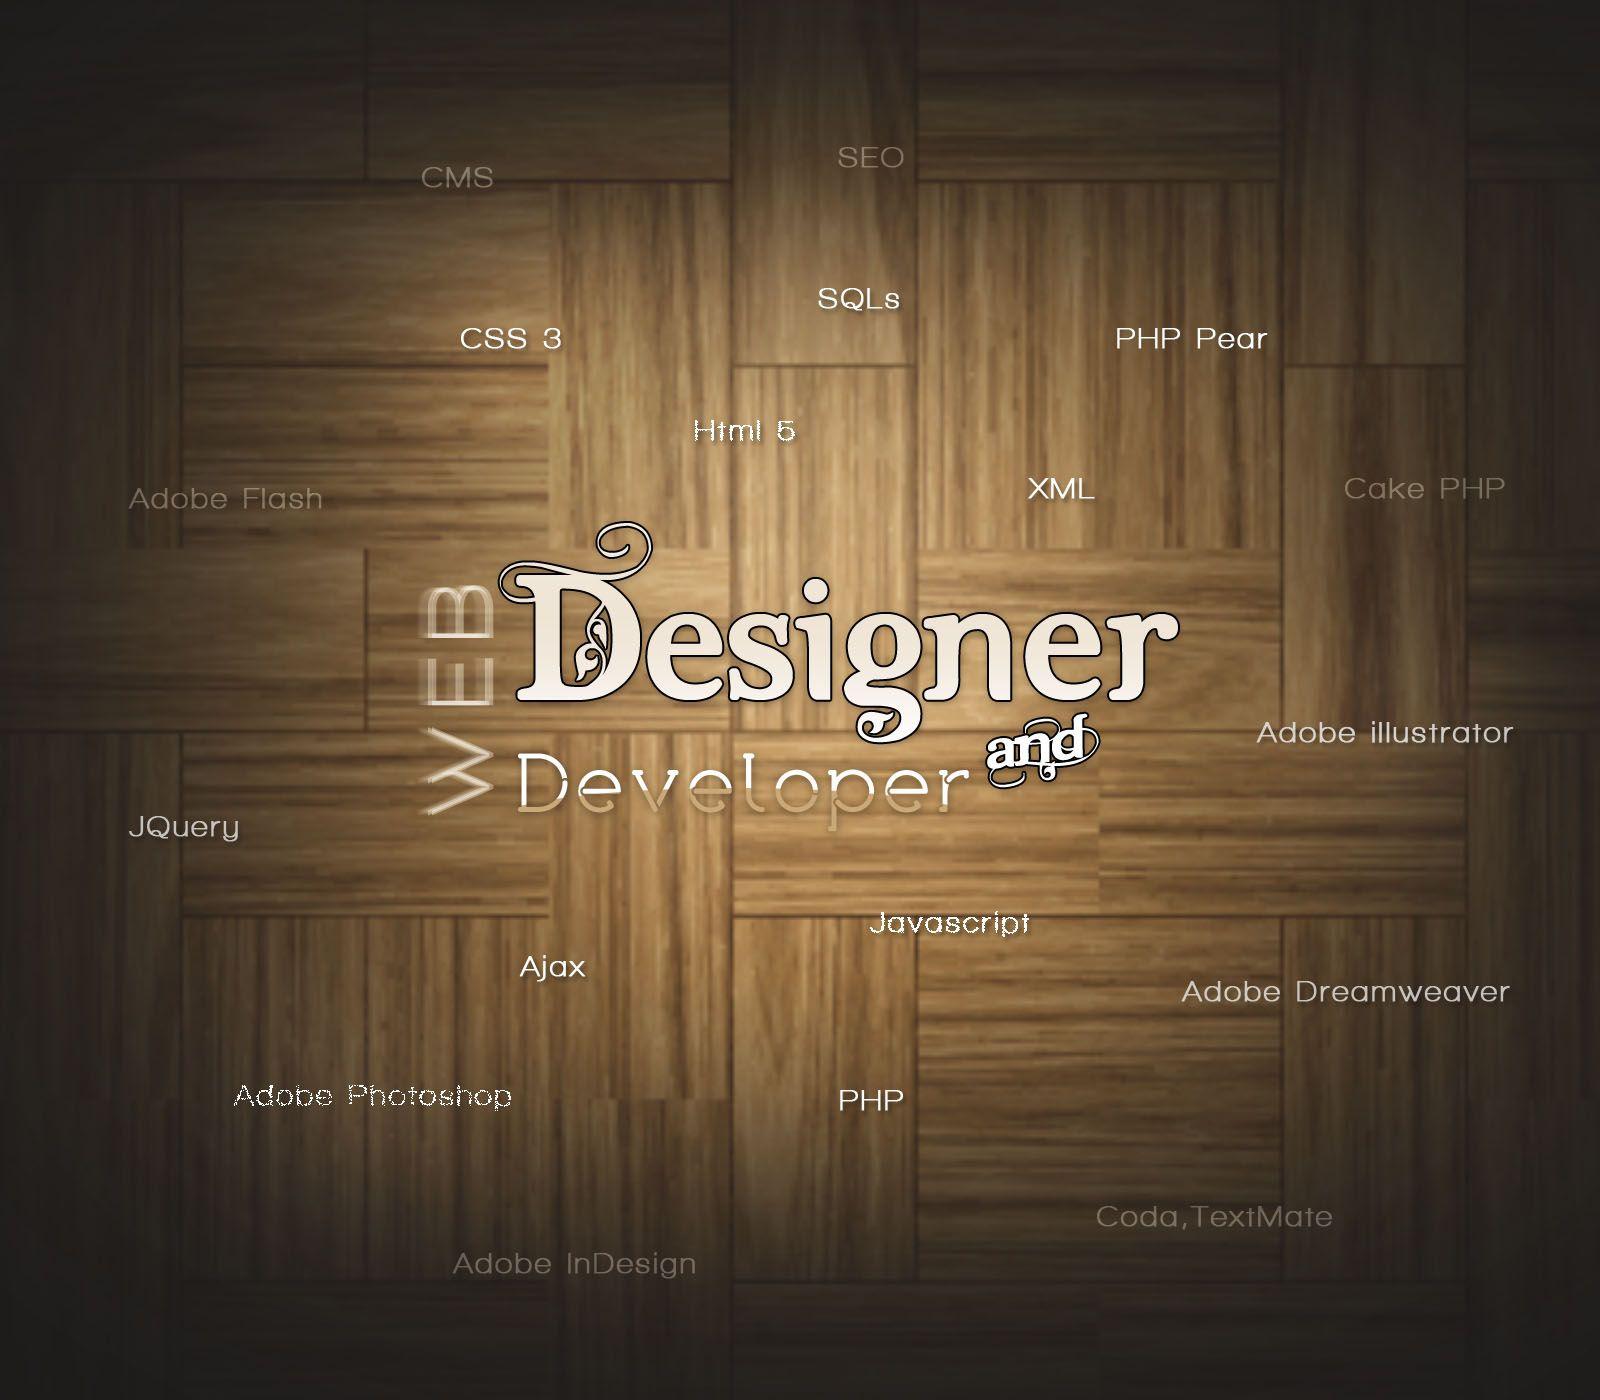 Web Designer Wallpaper. We the mini crini